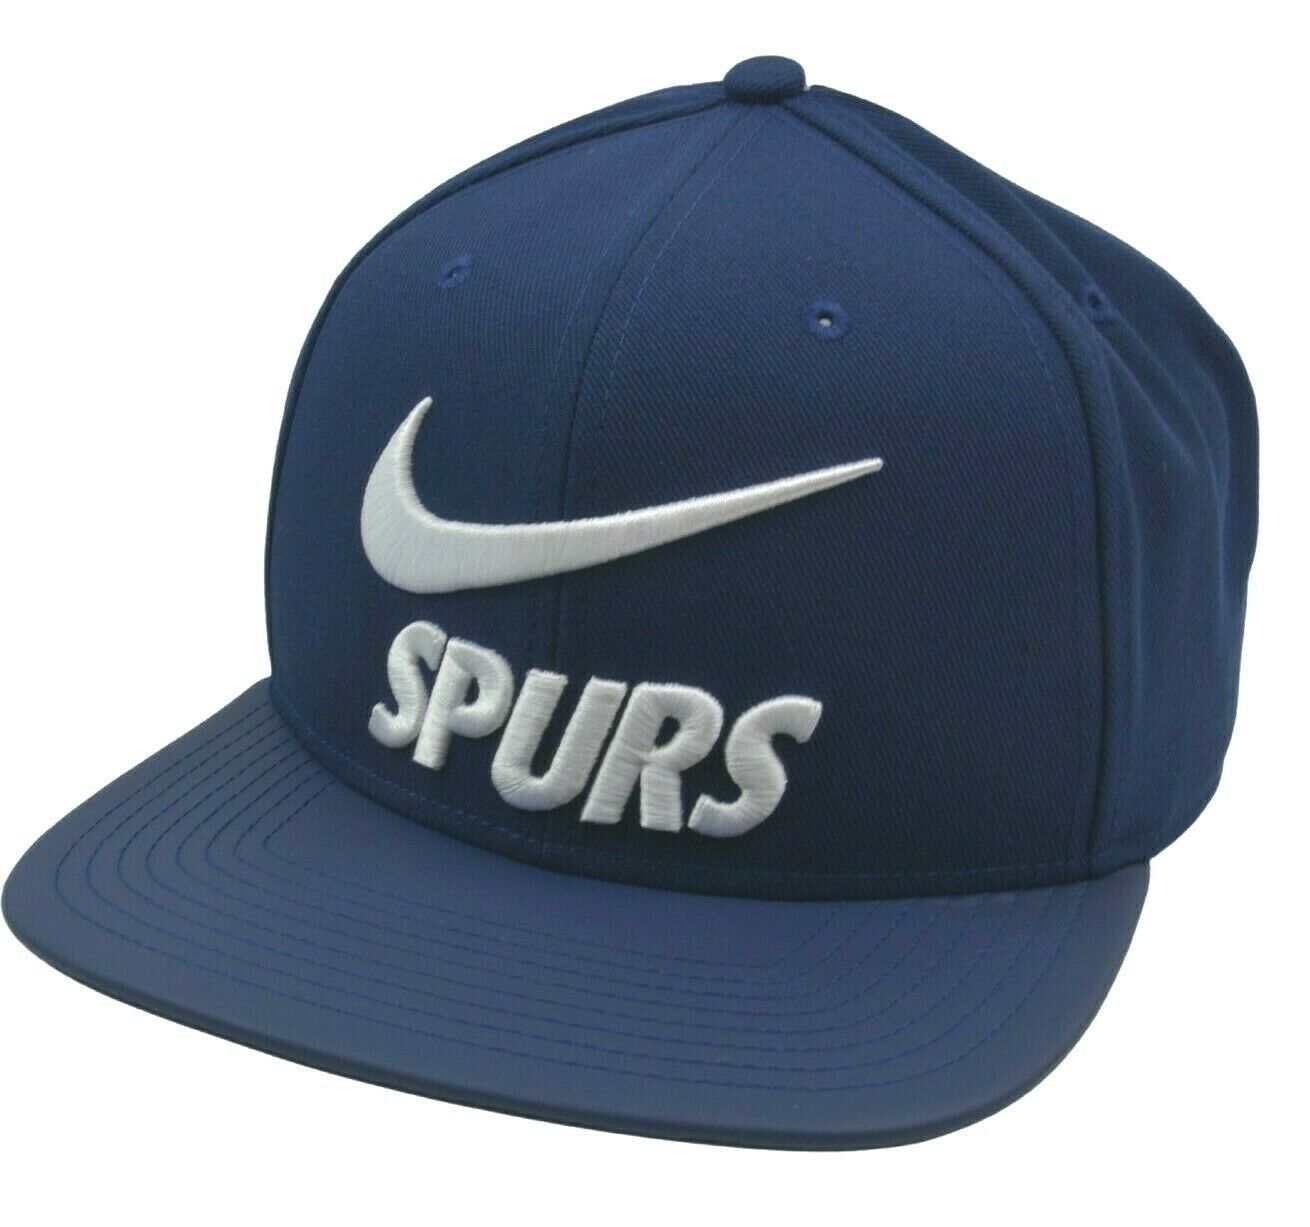 San Antonio Spurs Men’s NBA University Snapback Hat